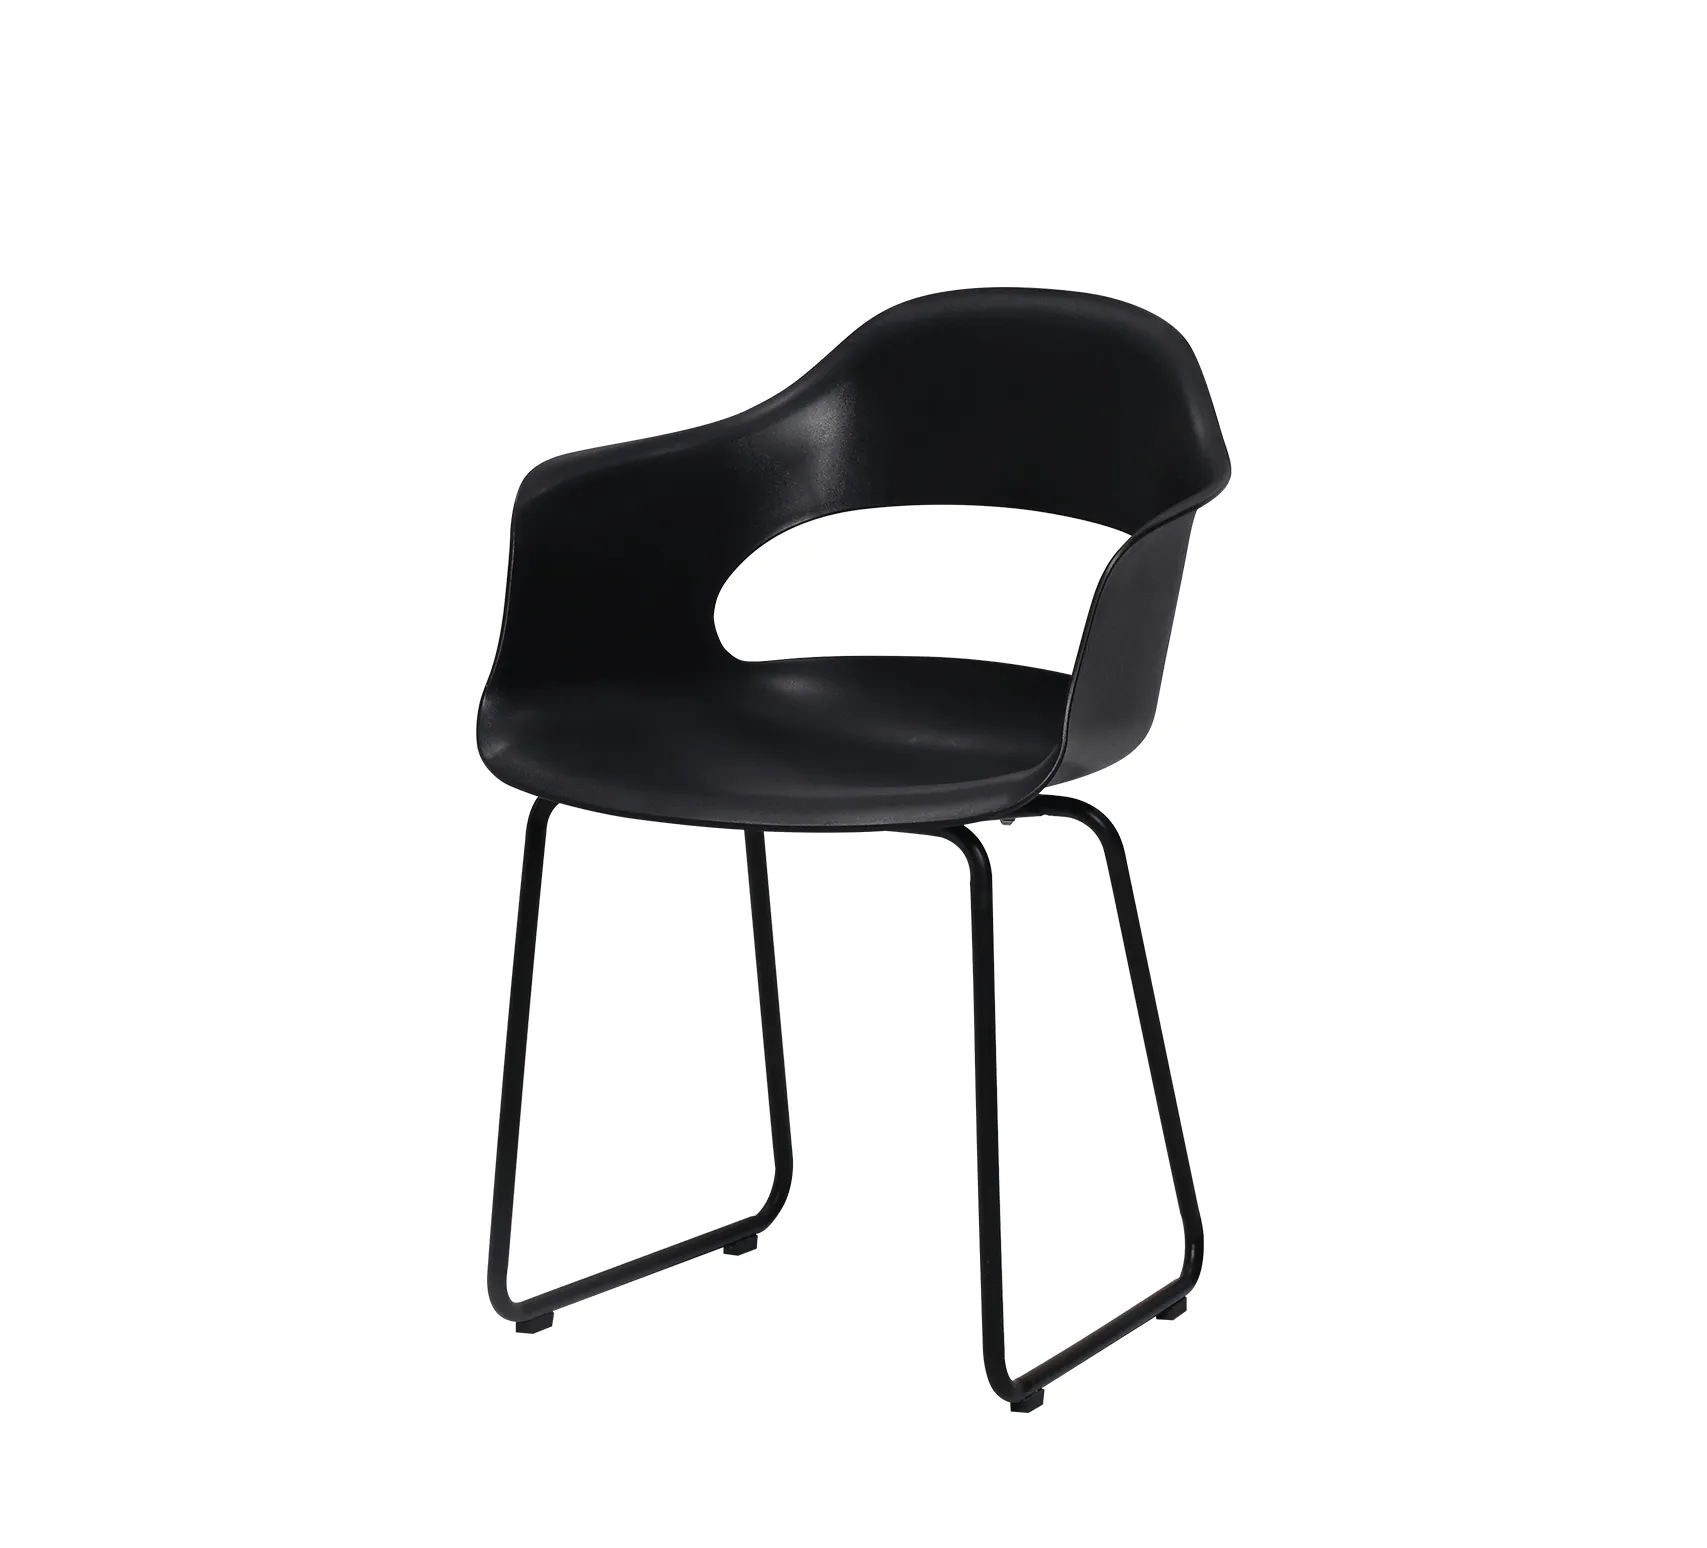 Olymplast Avanty Chair A - BLACK